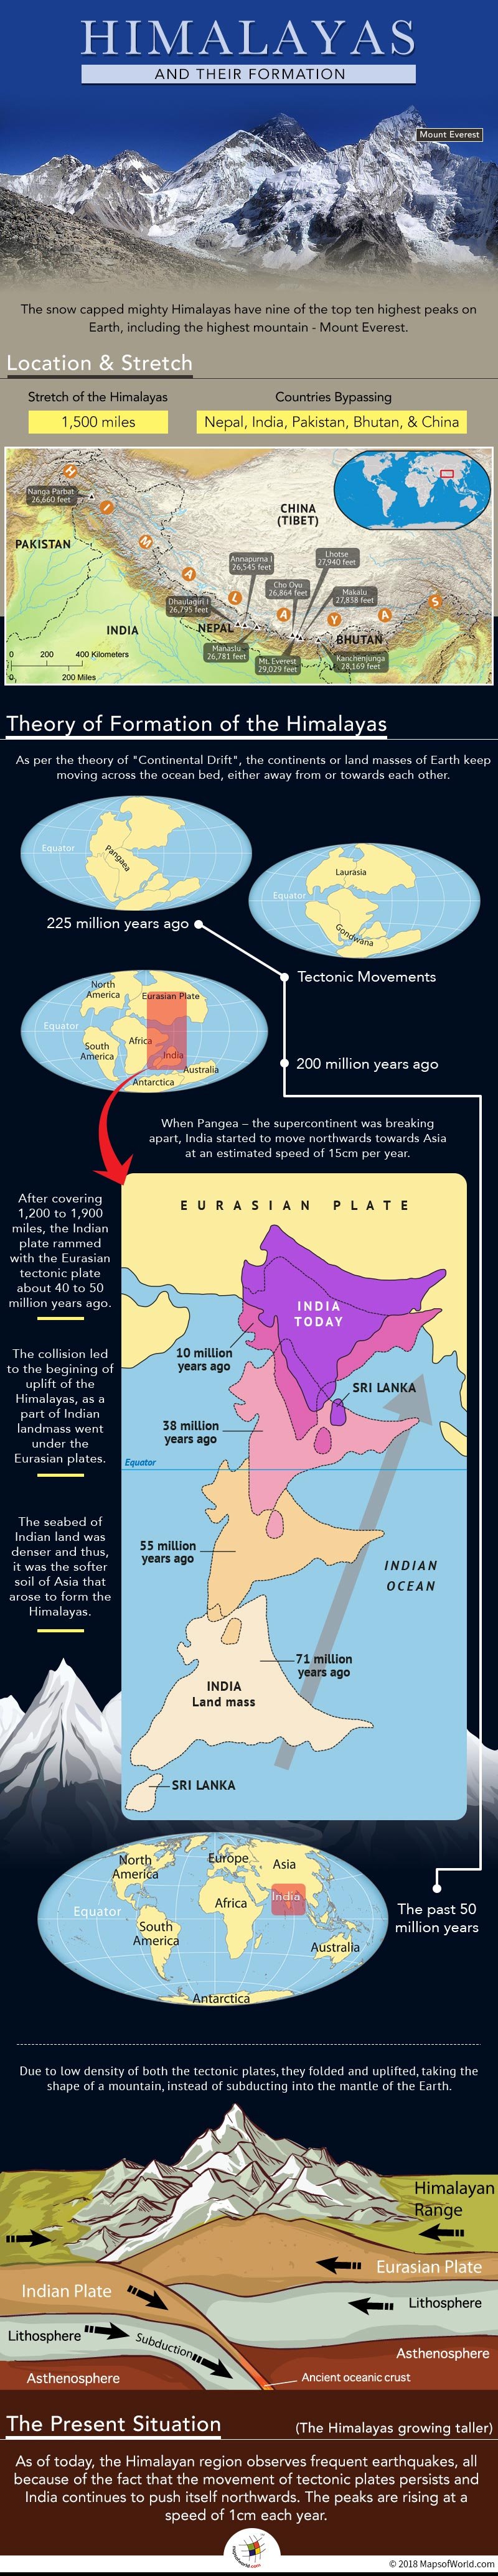 Infographic elaborating formation of Himalayas